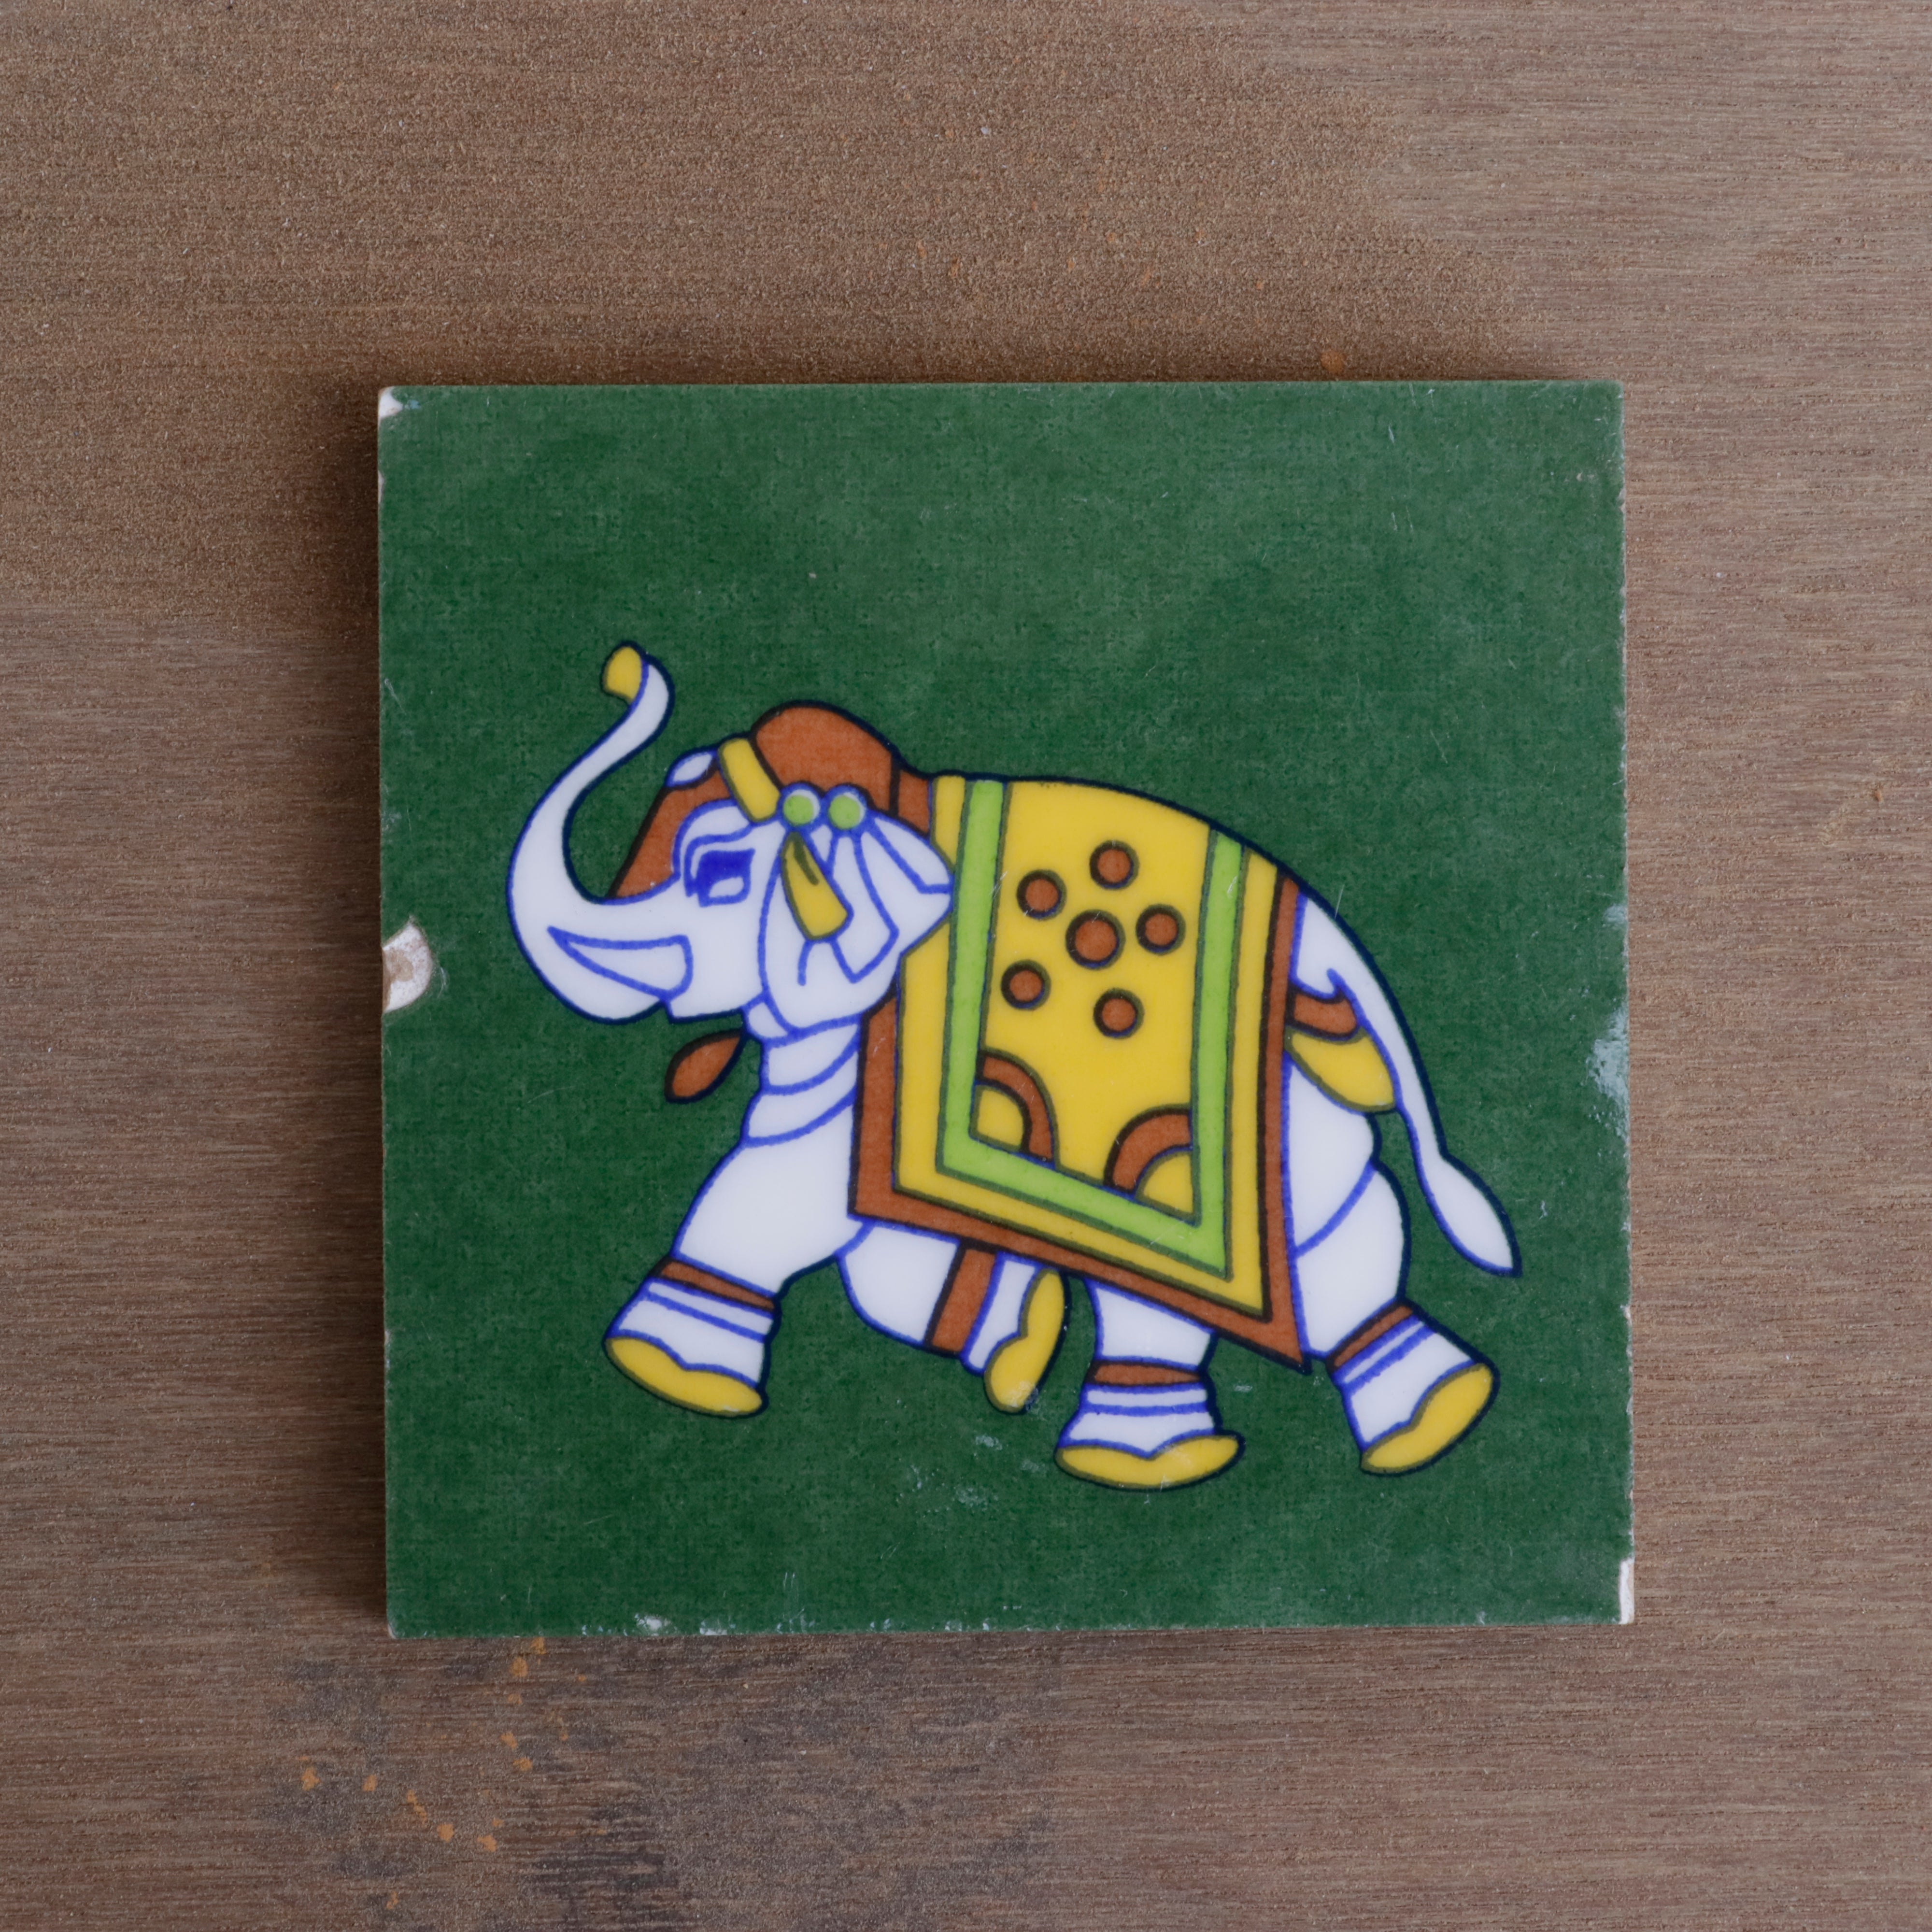 Madgreen Cultural Elephant Designed Ceramic Square Tile Ceramic Tile